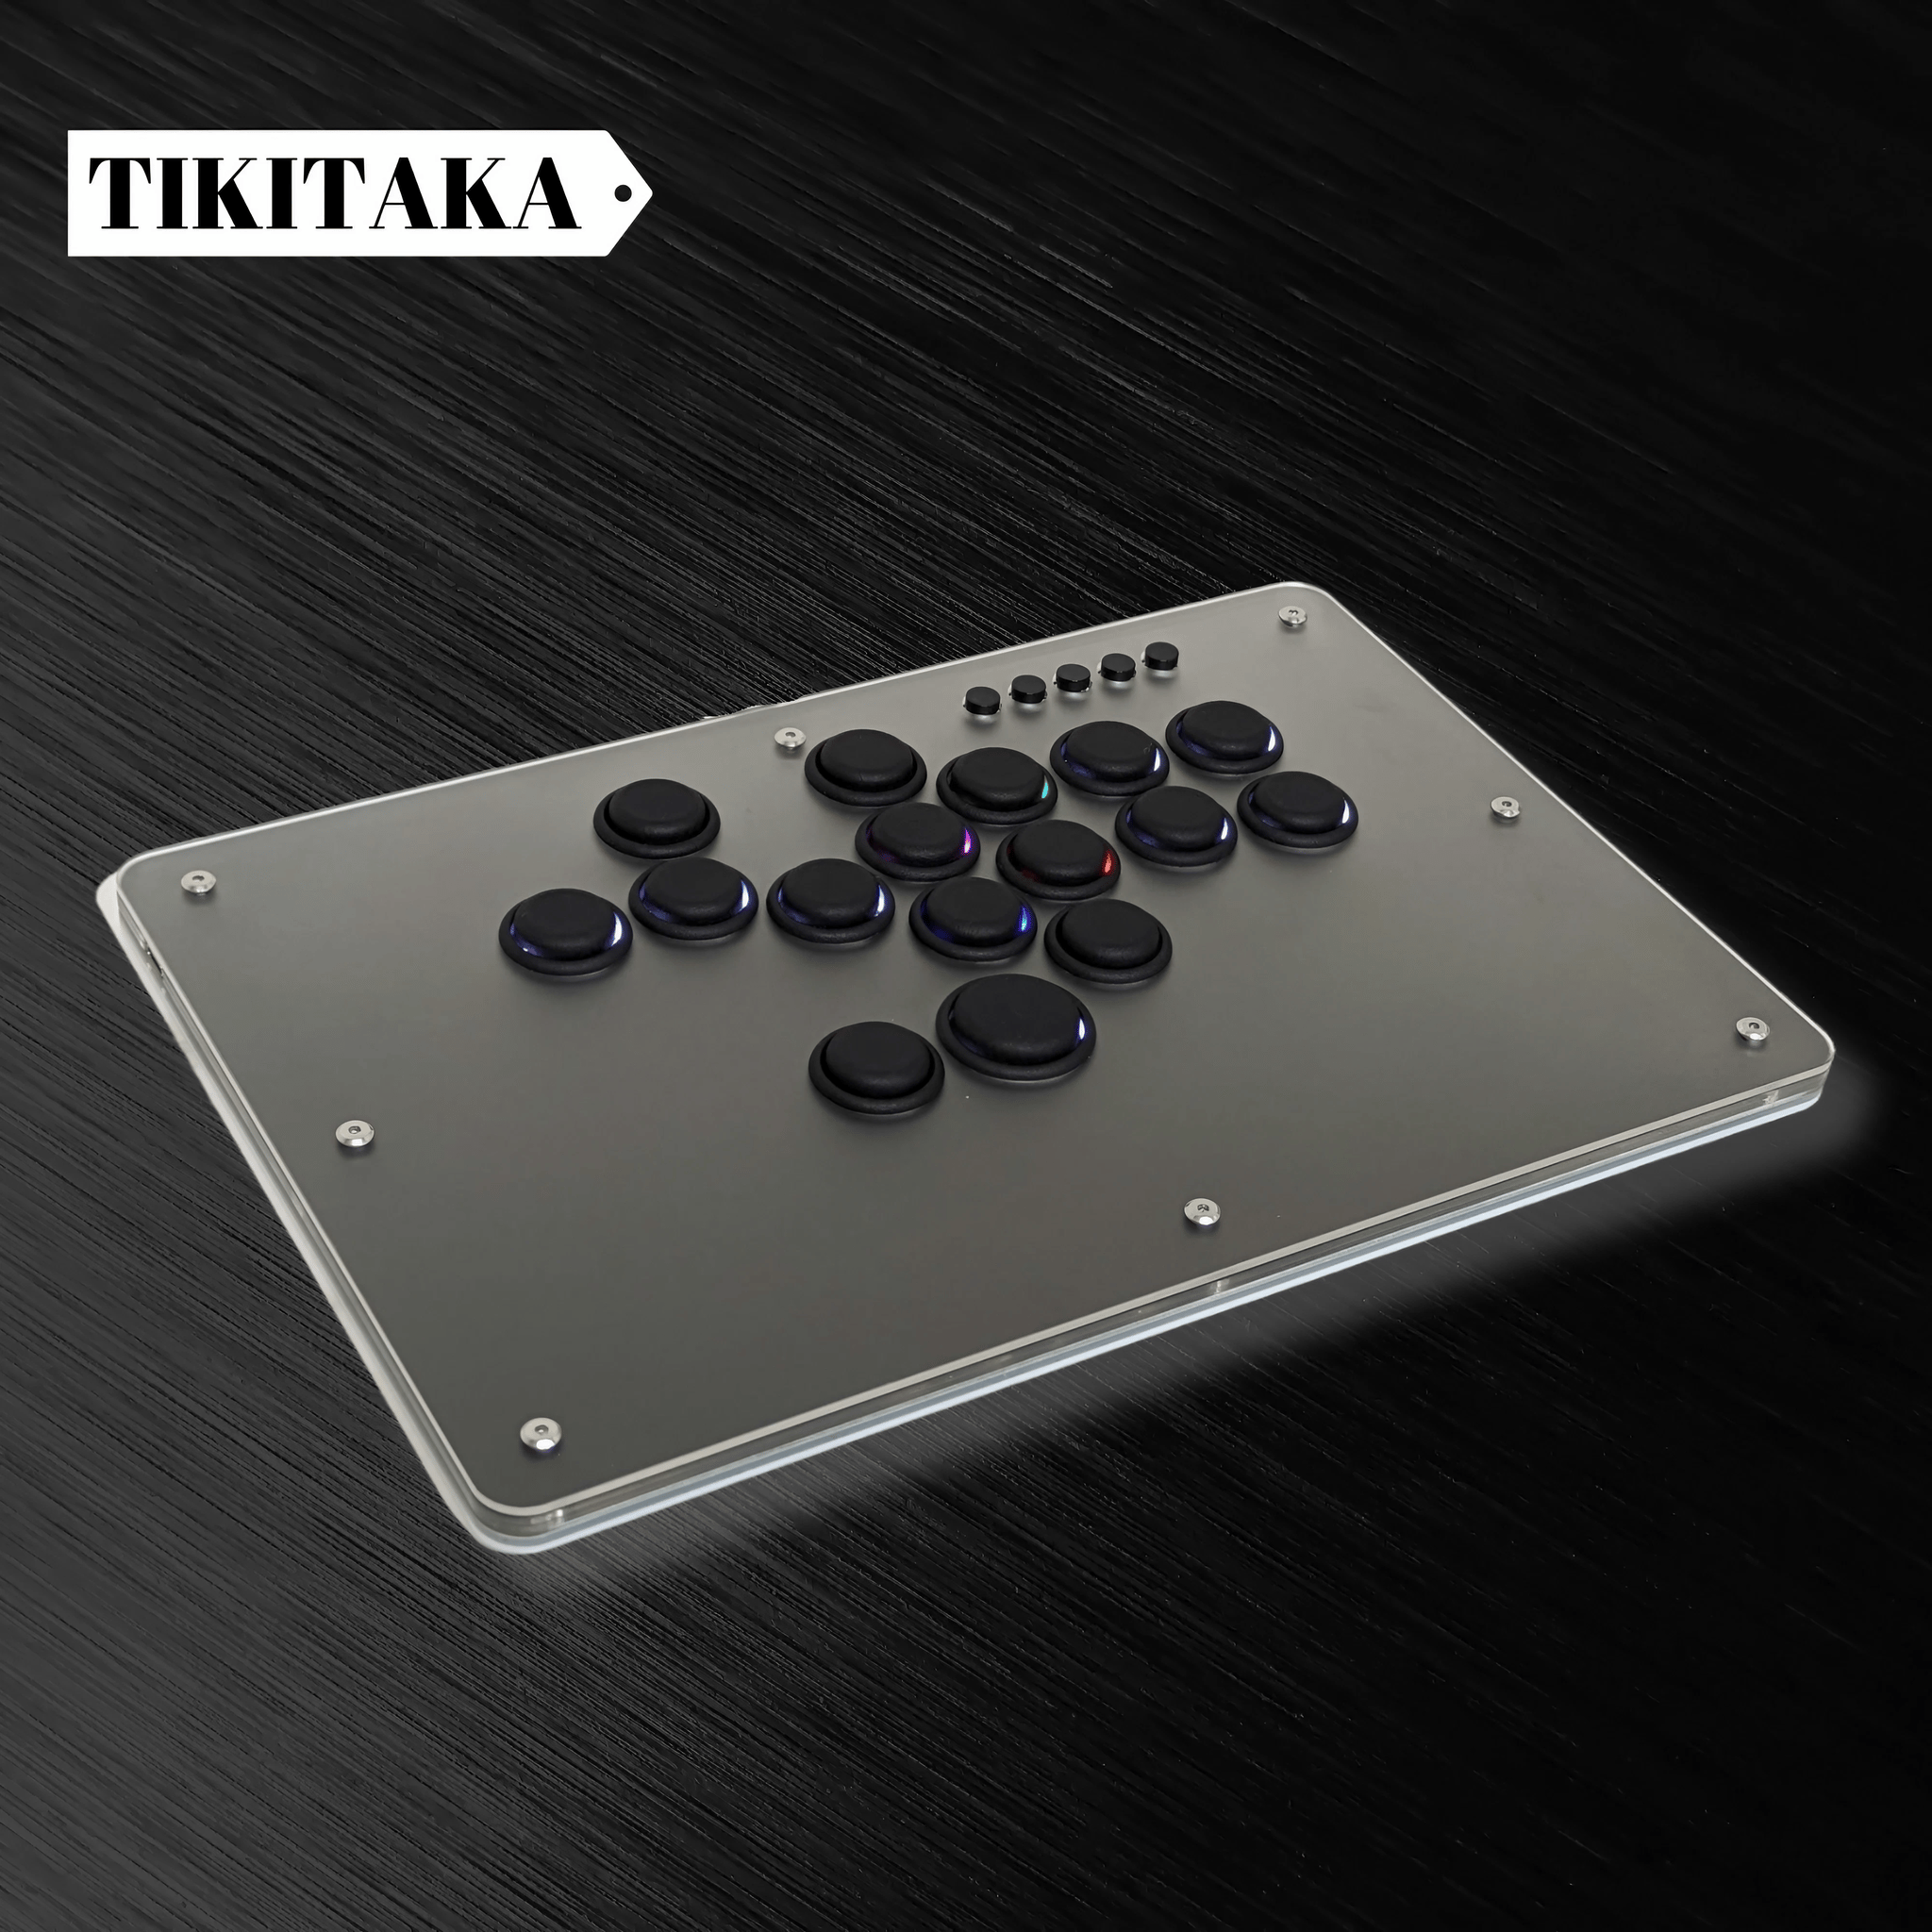 Tikitaka FTG Board アップグレード版 - アップグレード PS5対応版